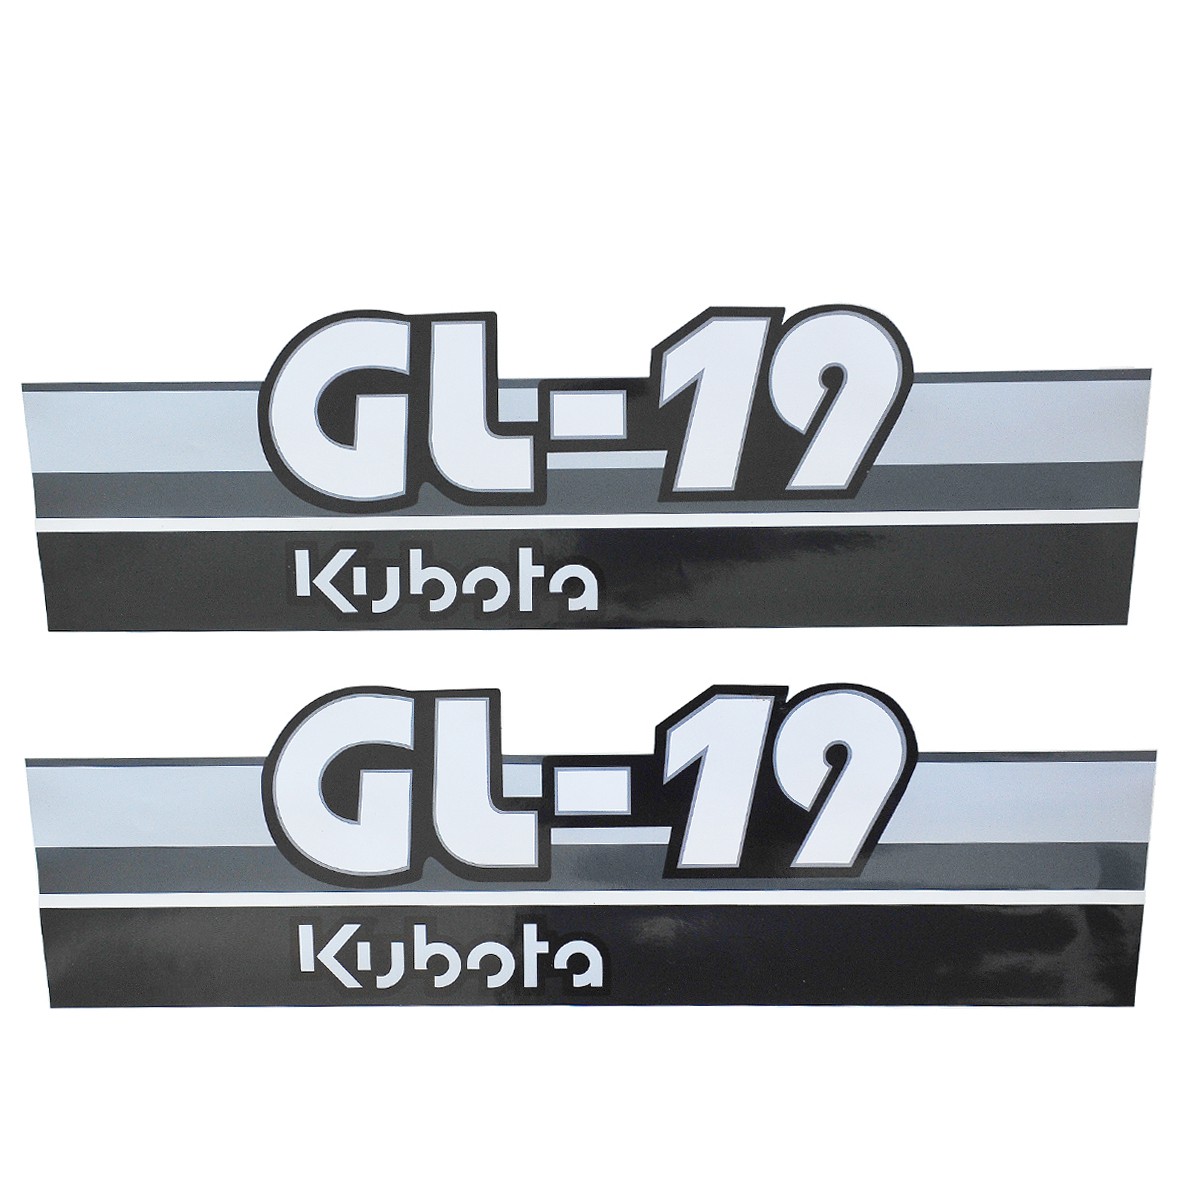 Kubota GL19 stickers